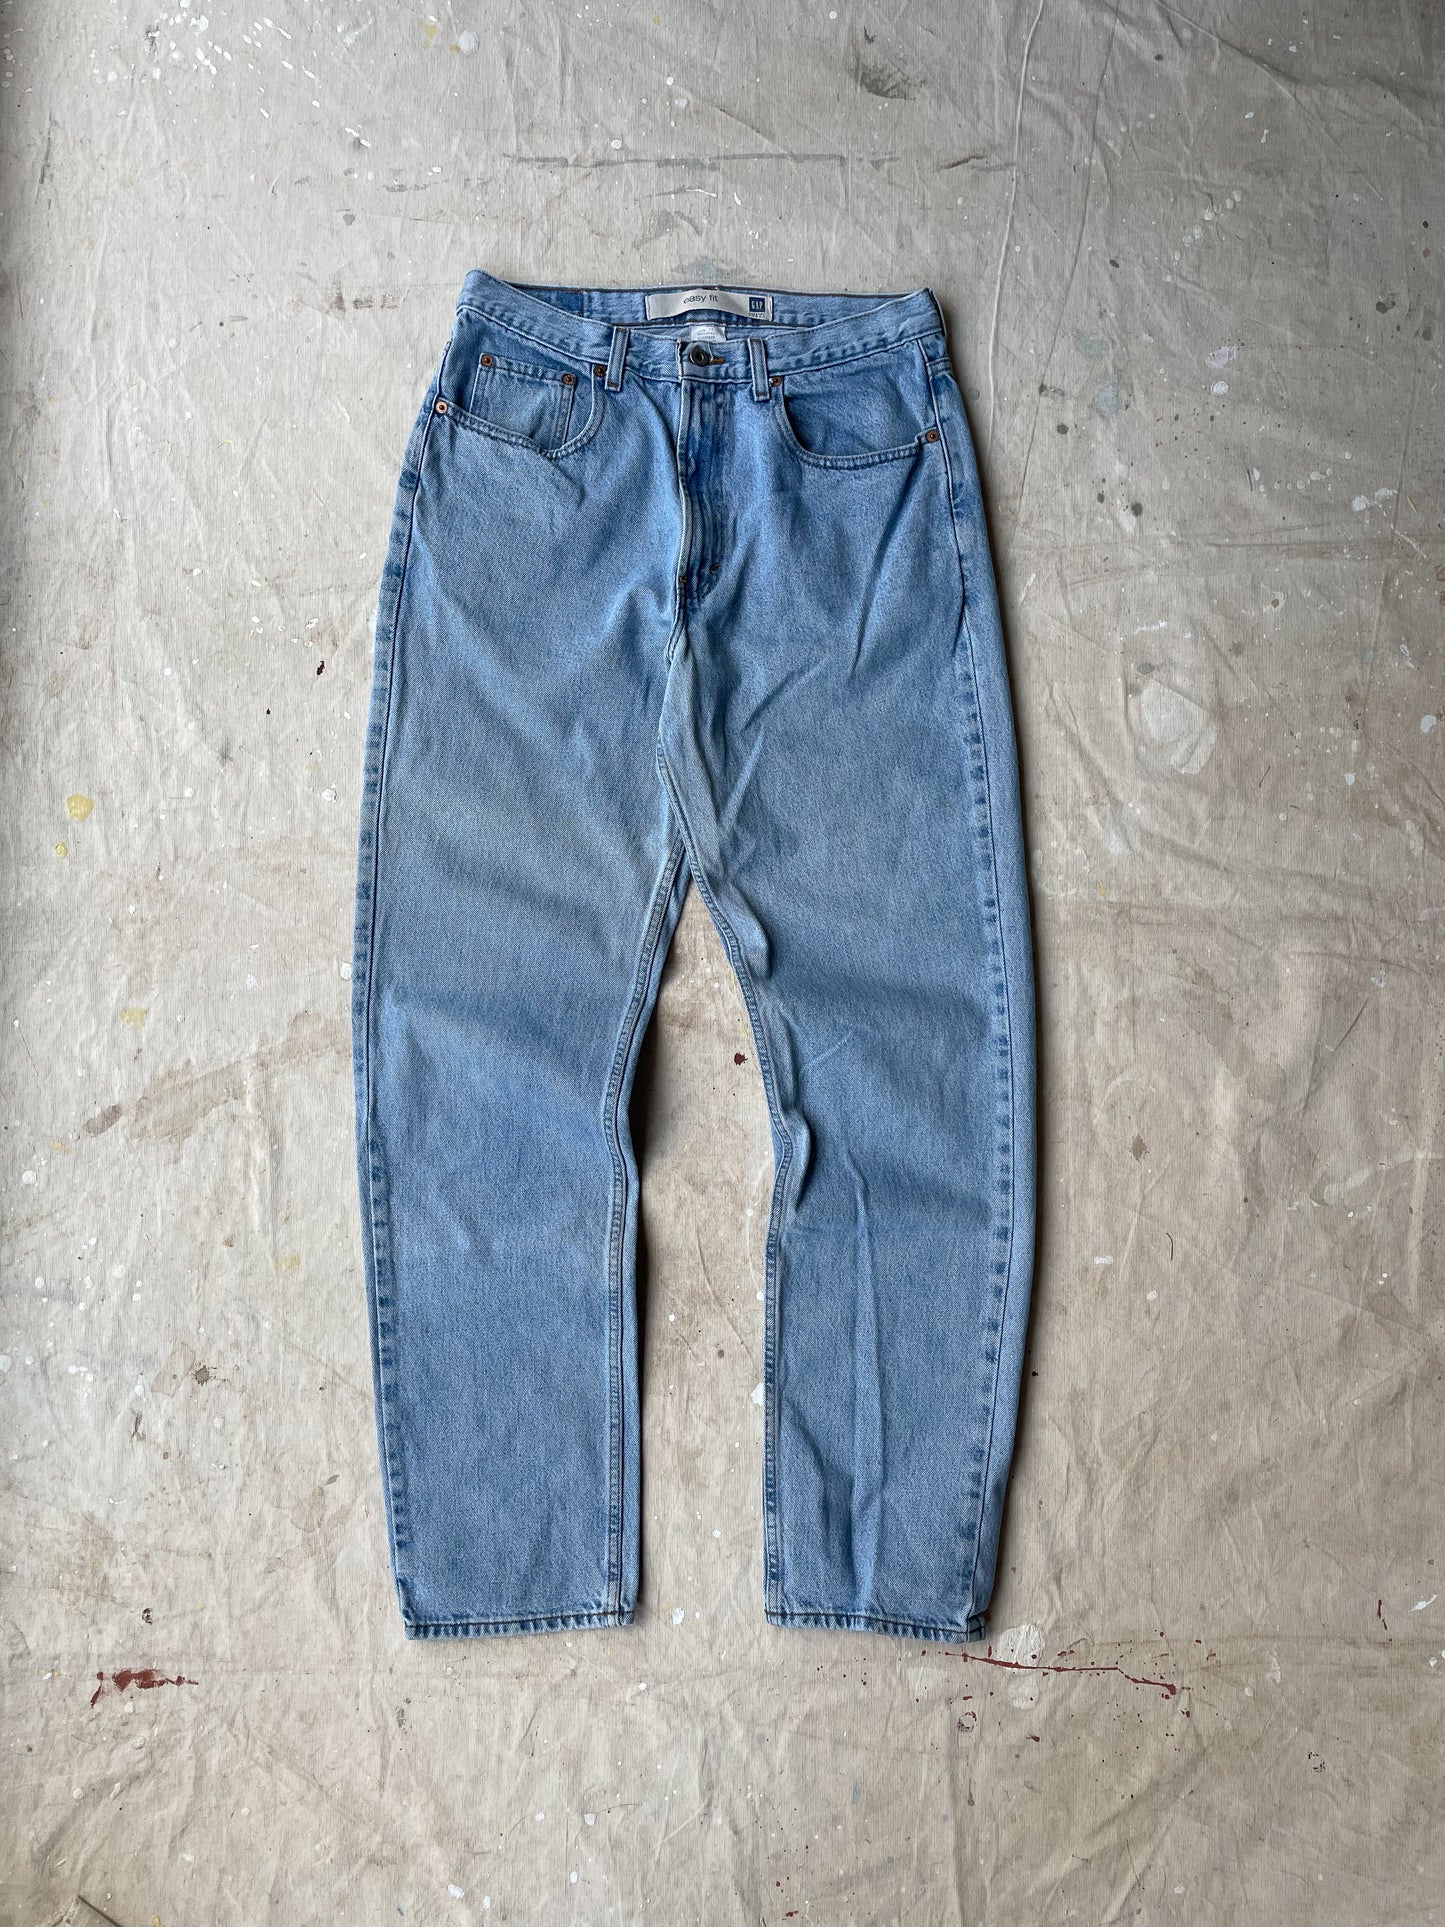 GAP Light Wash Blue Jeans—[32X33]